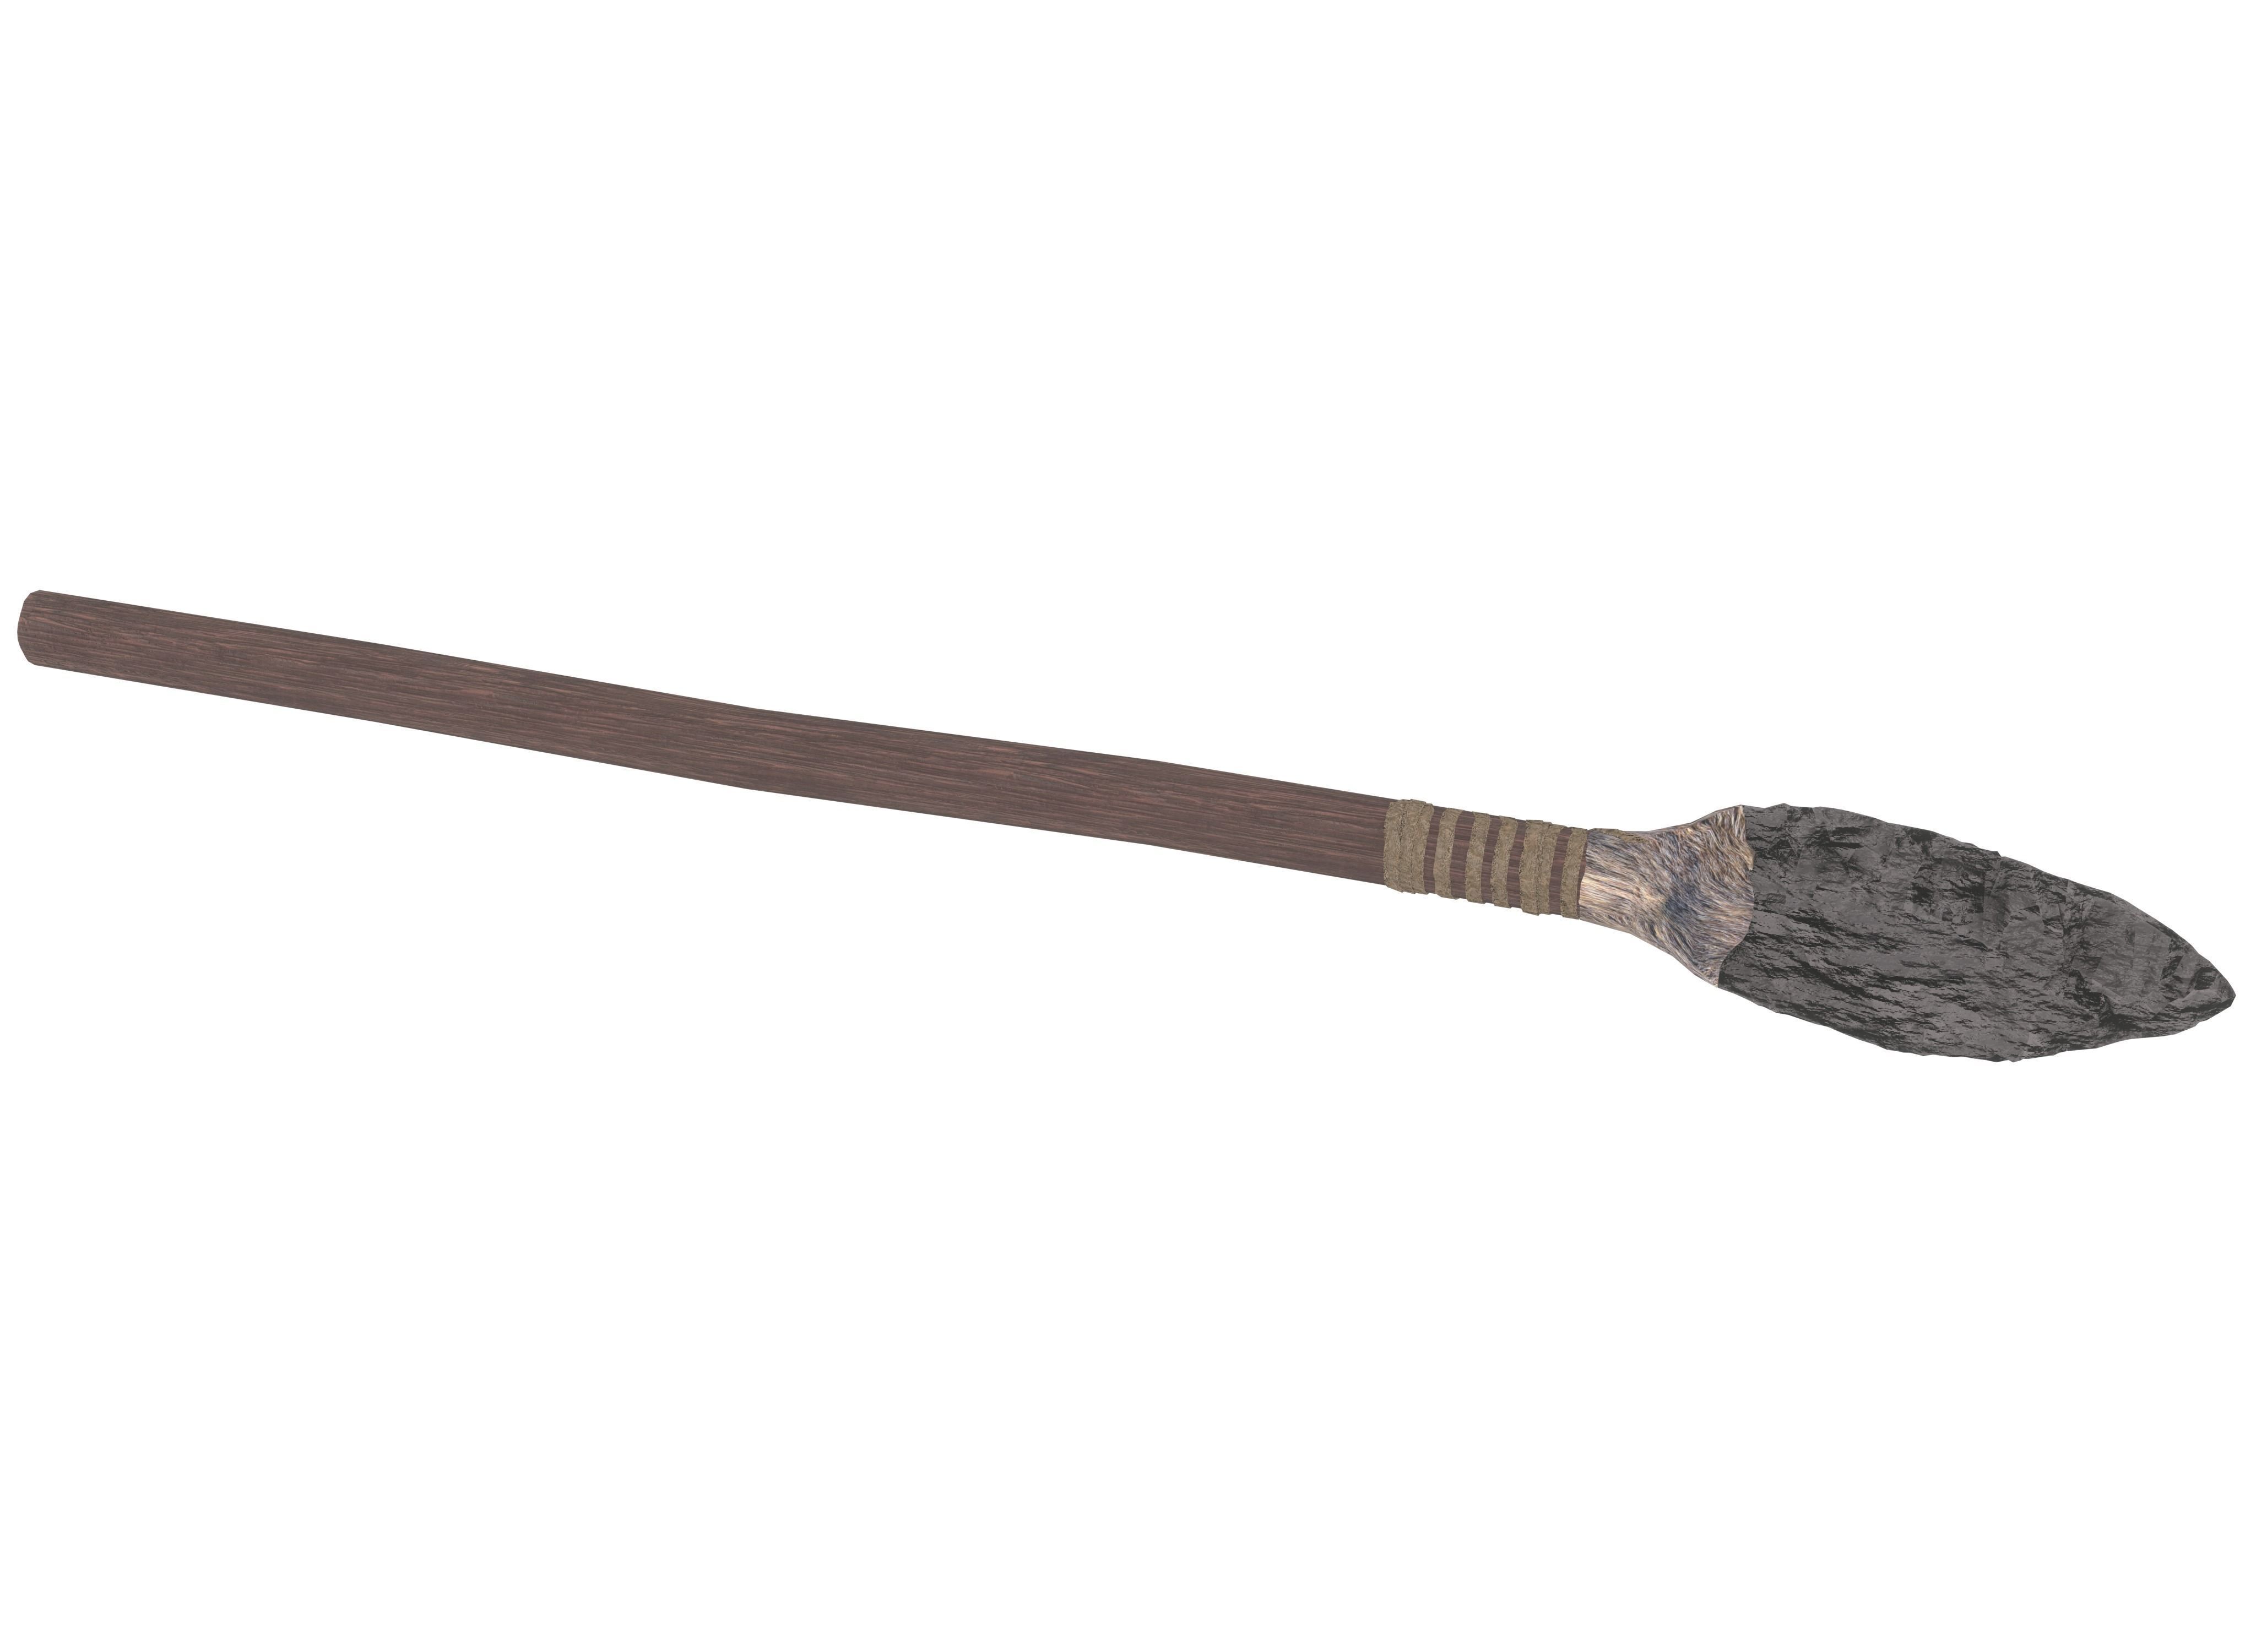 stone-age-spear-3d-model-low-poly-obj-fbx-blend.jpg